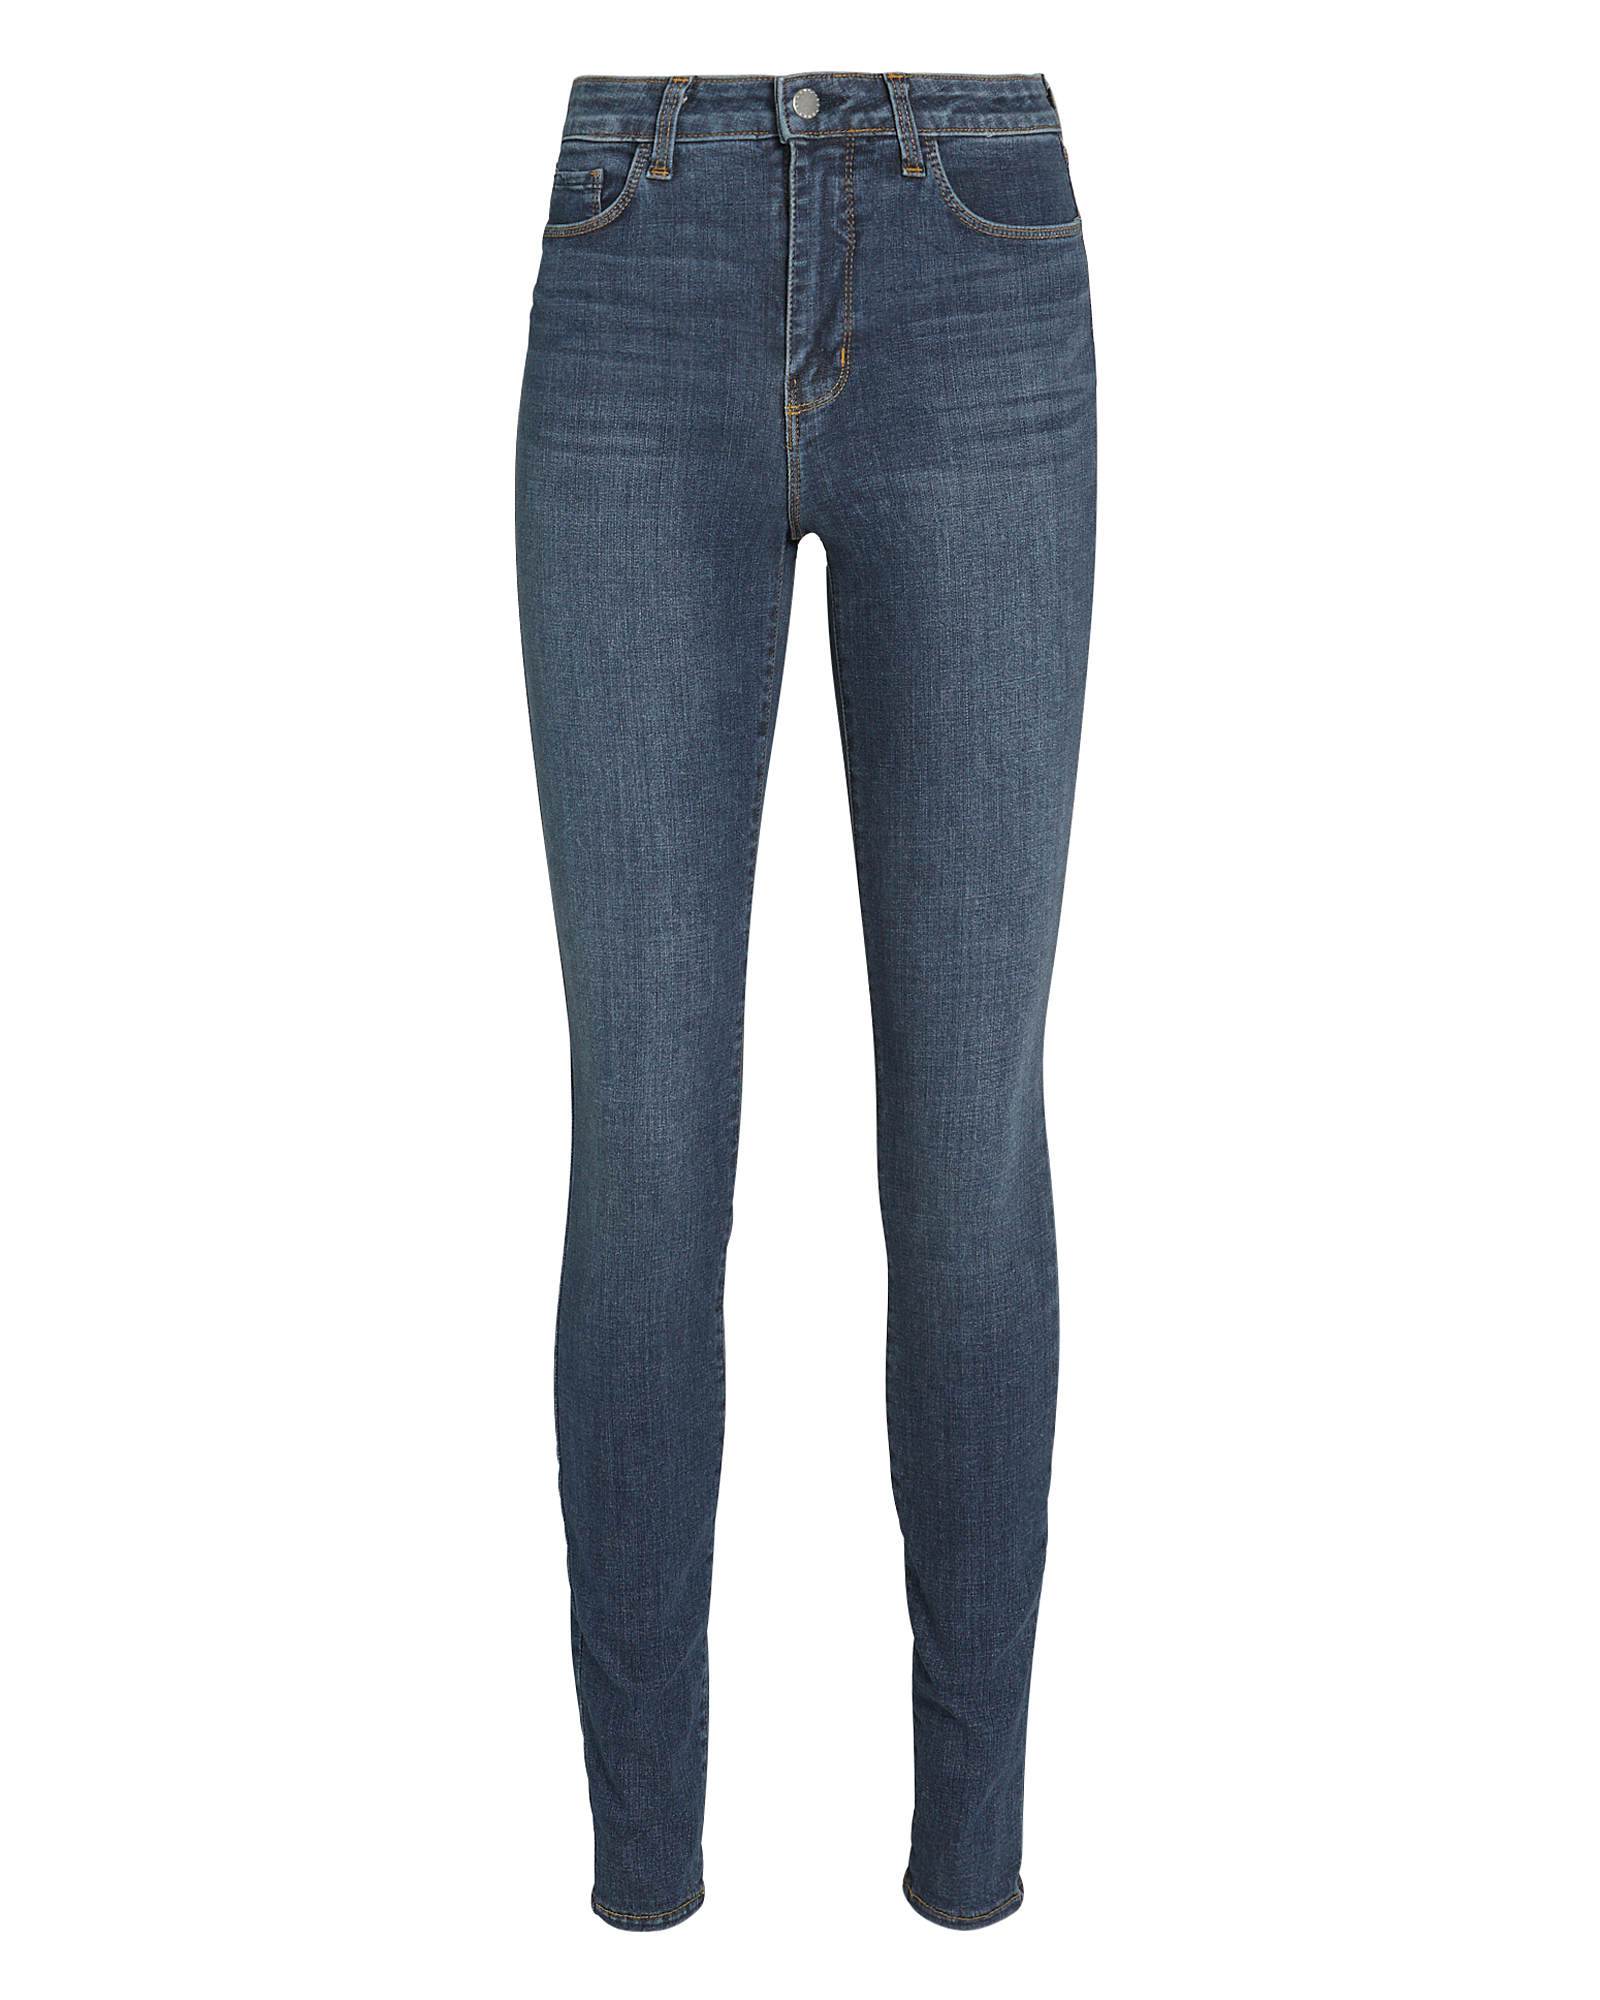 Womens Clothing Jeans Skinny jeans Blue LAgence Denim Marguerite High-rise Skinny Jeans in Dark Blue 